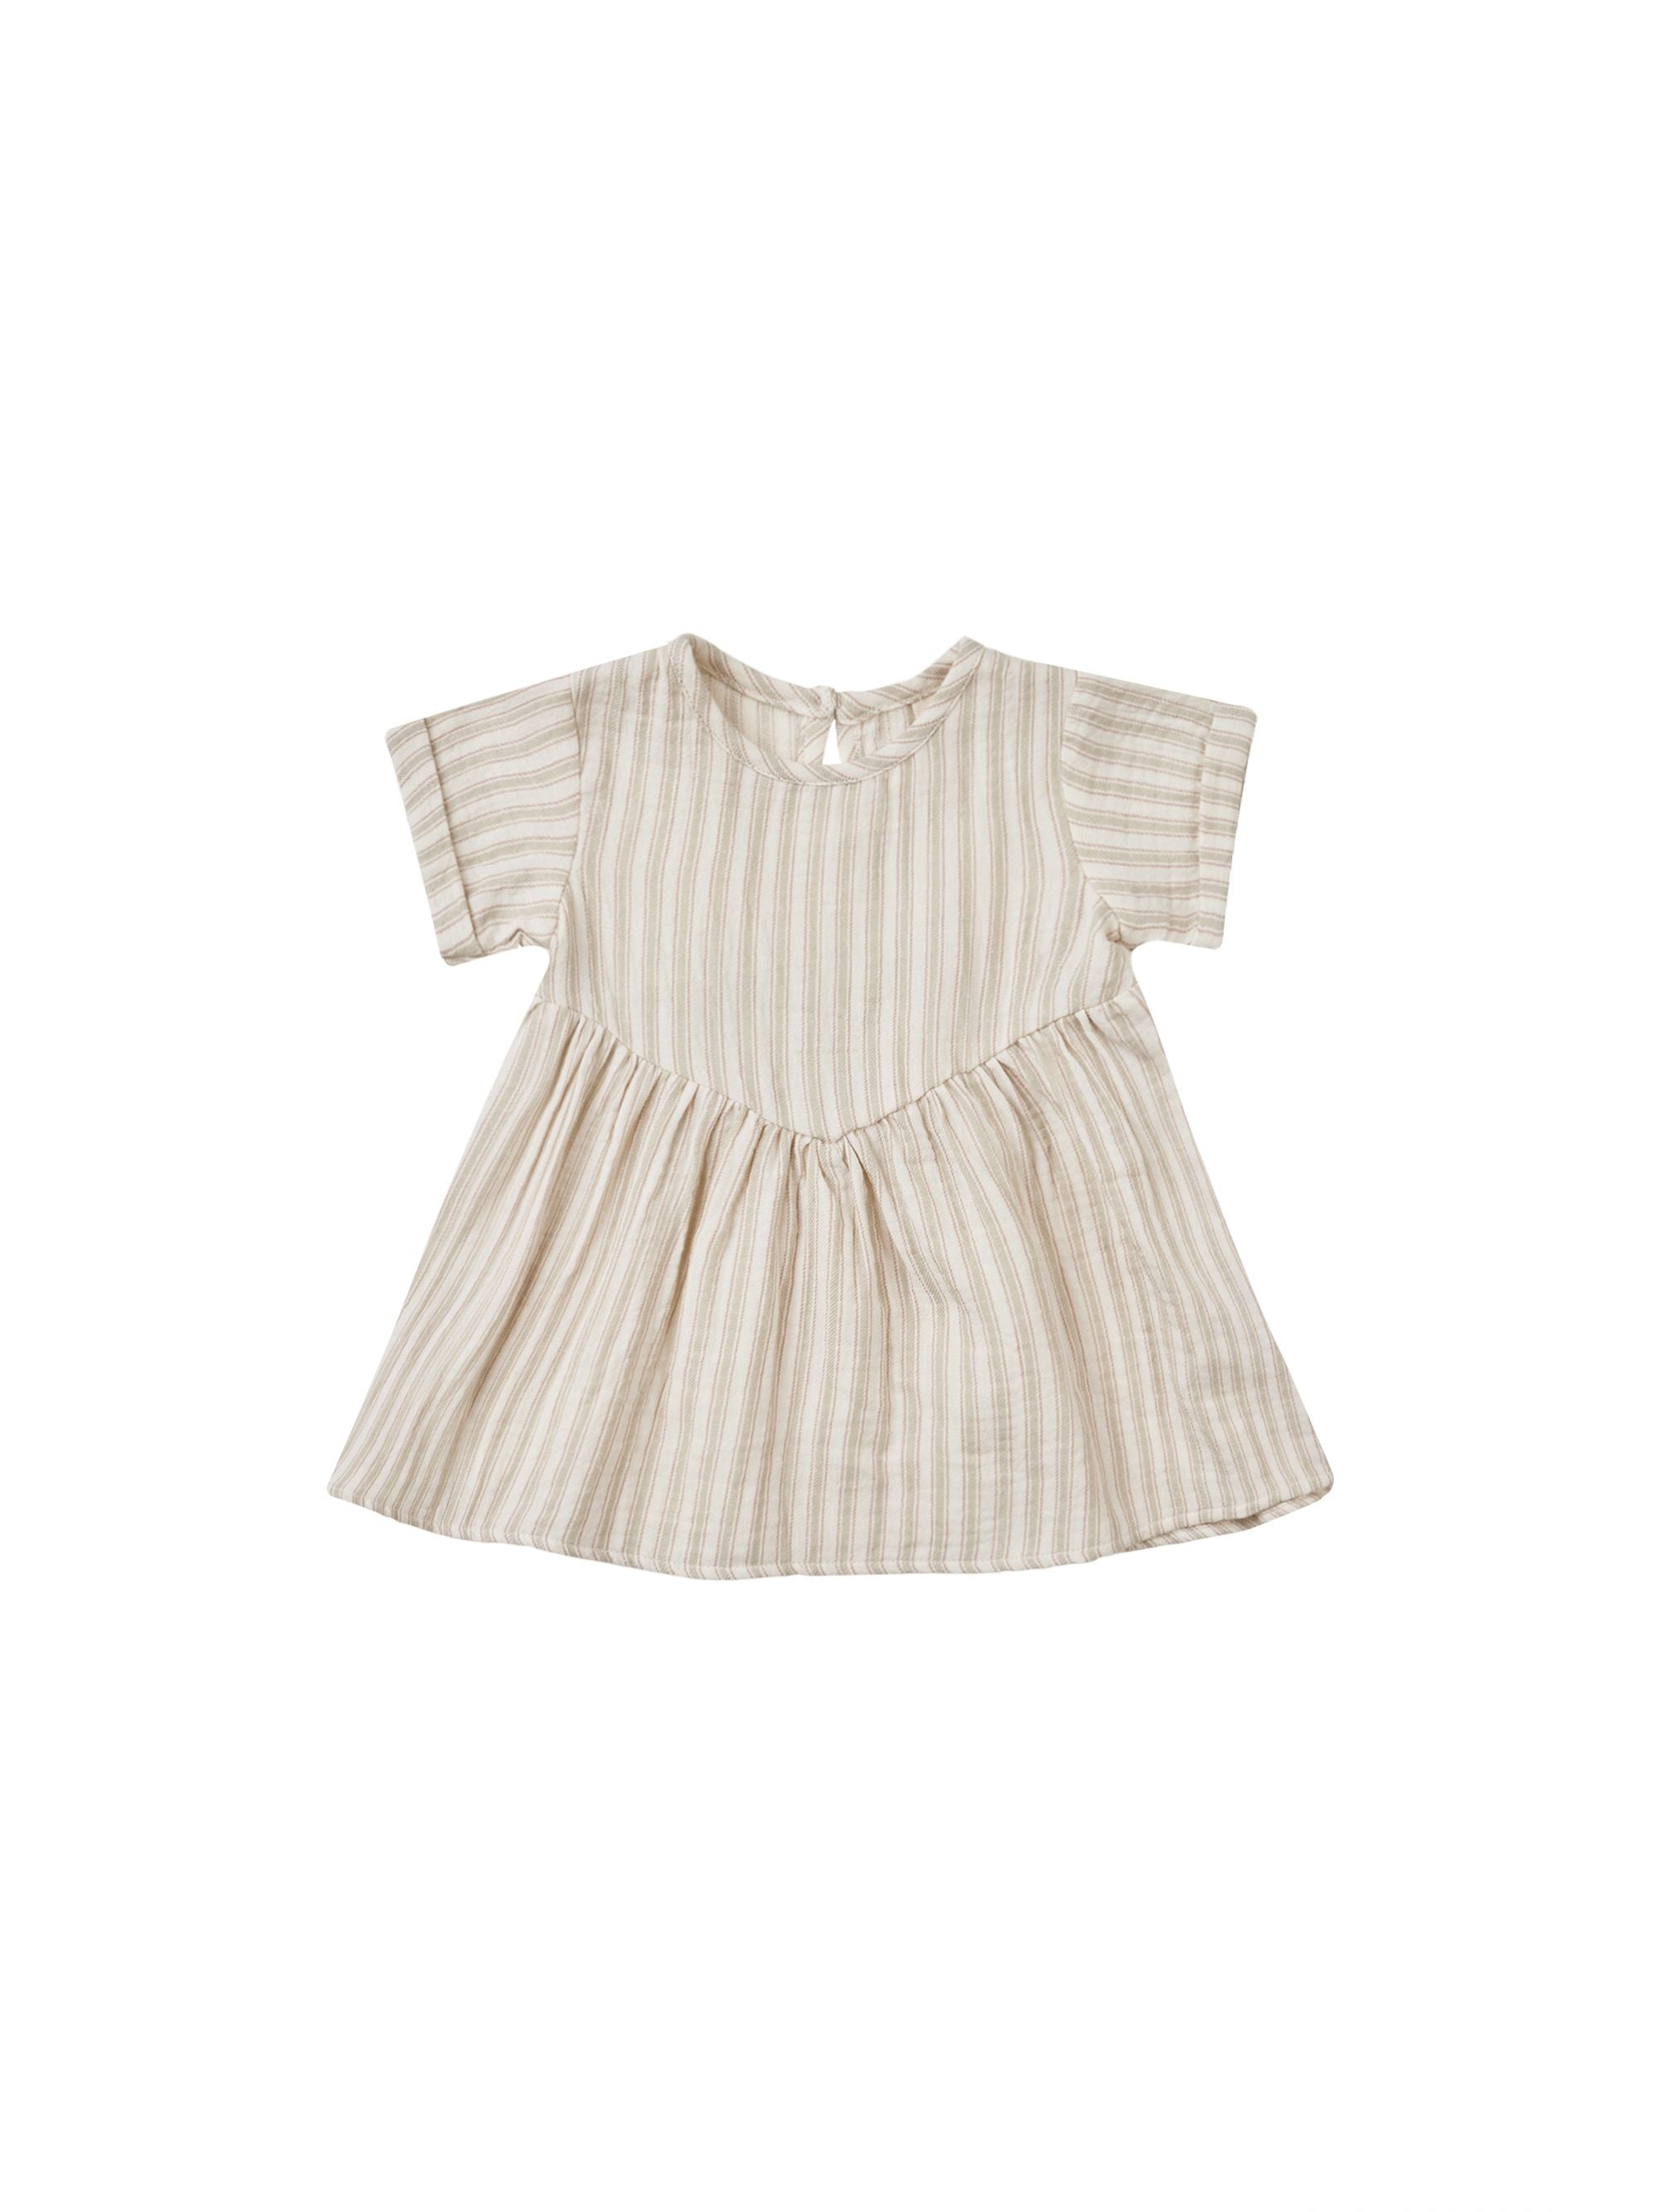 Brielle Dress | Vintage Stripe